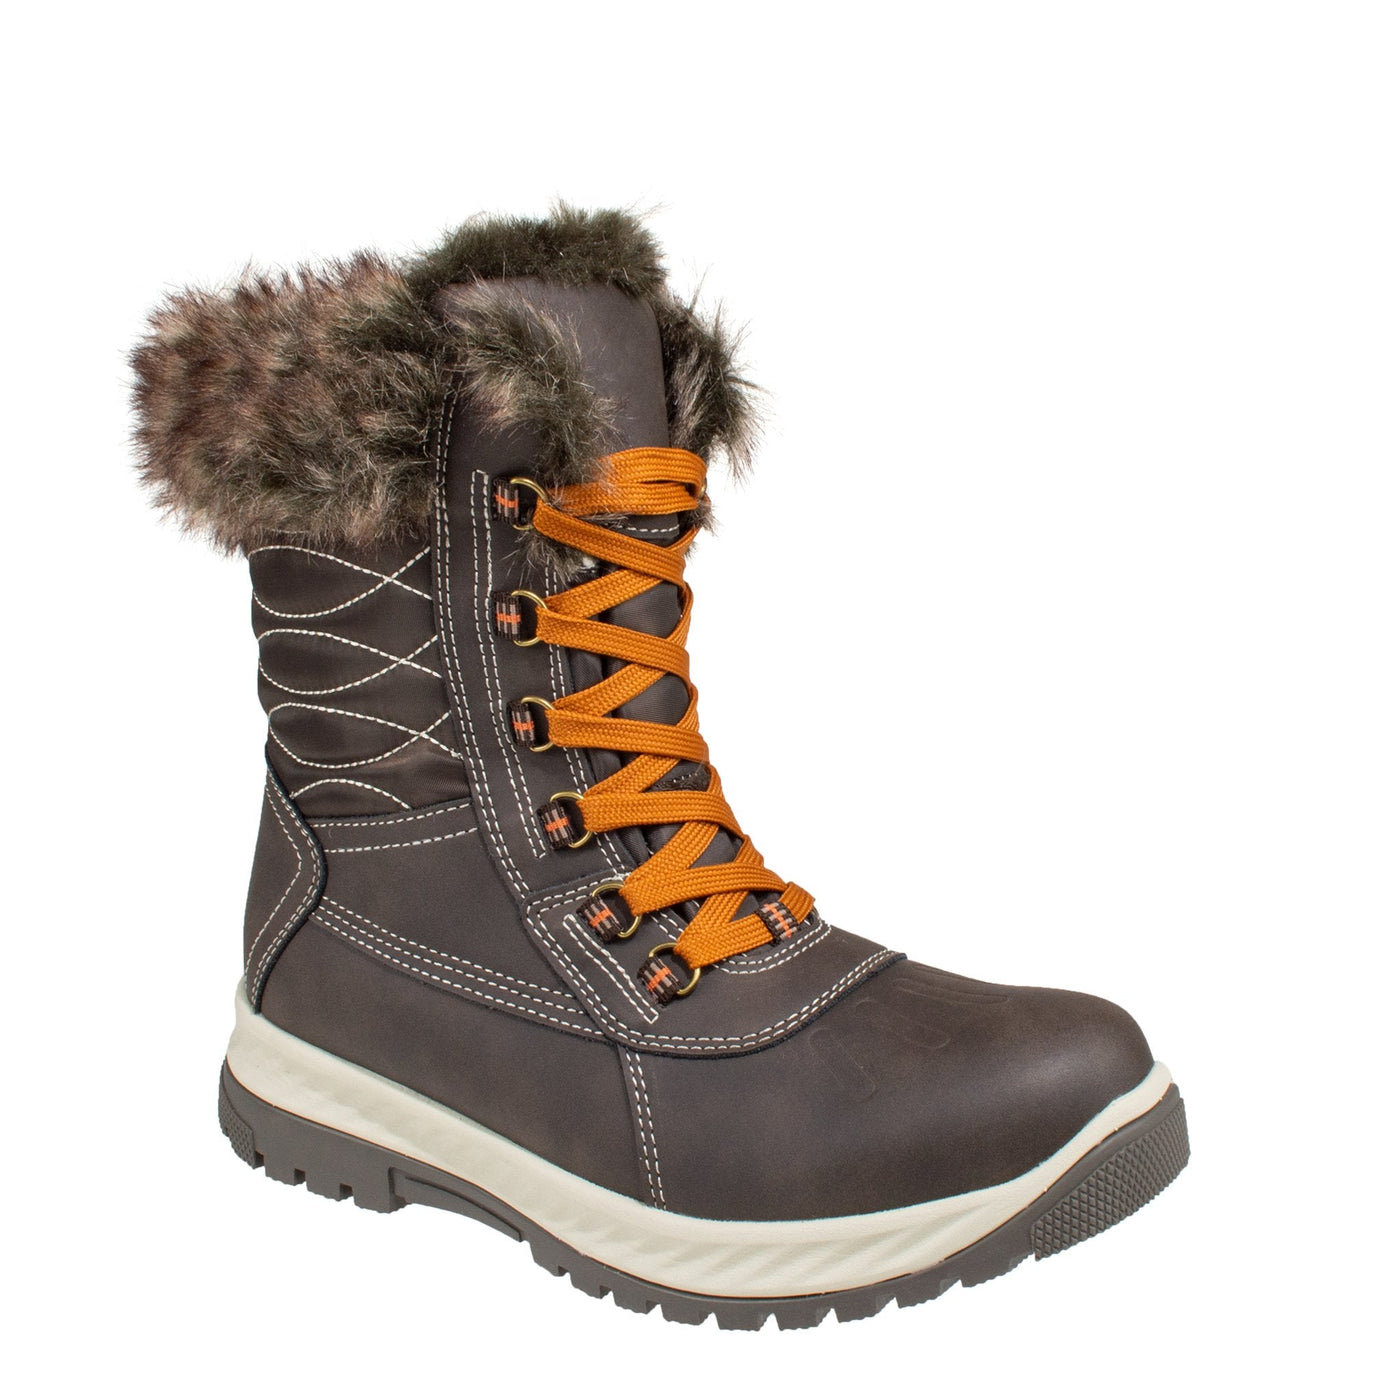 women's dark brown, stylish vegan leather winter boot